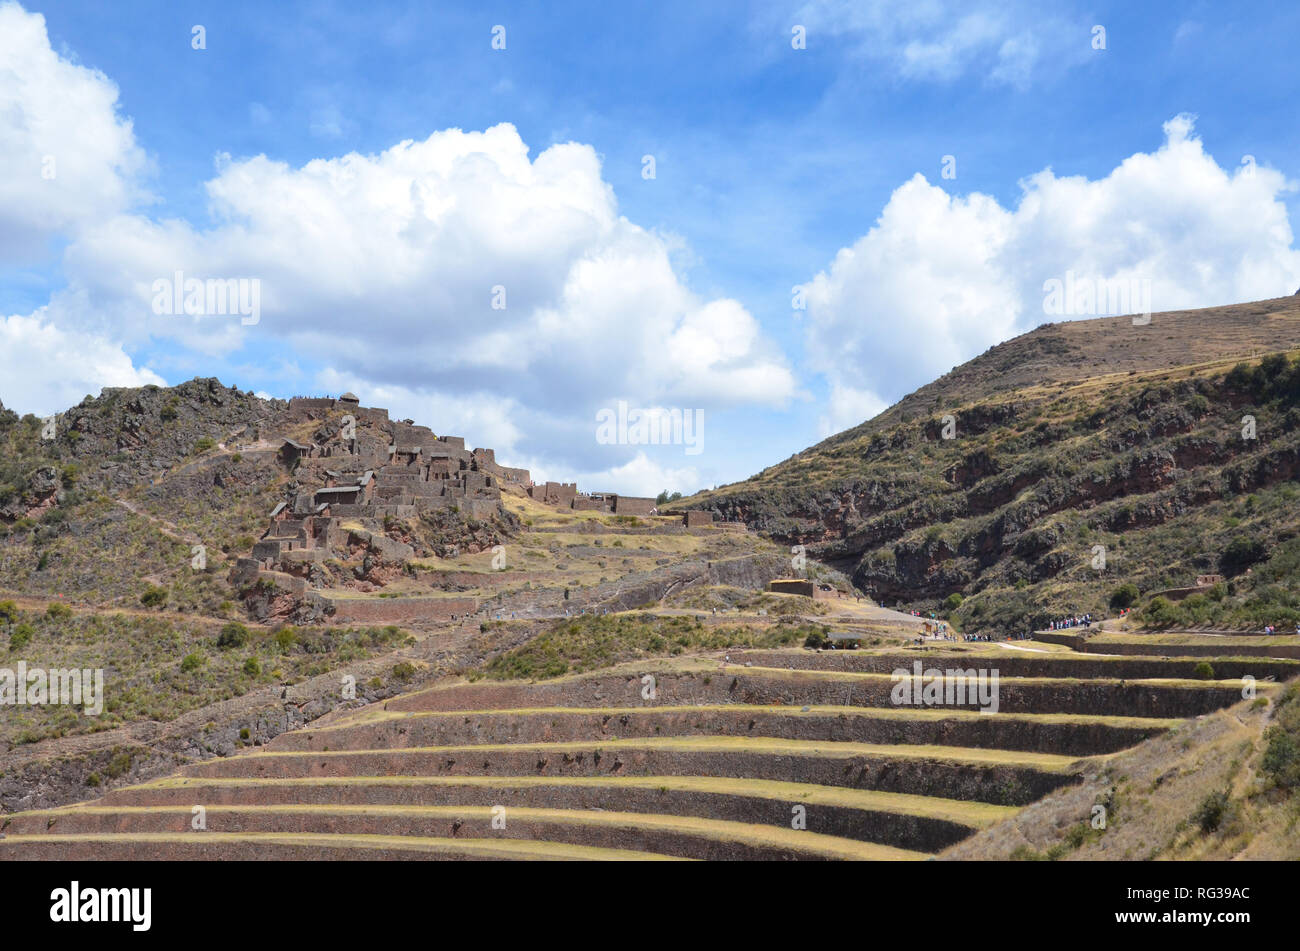 PISAQ / PERU, August 16, 2018: Bottom view of the terraces in the ruins of Pisaq near Cusco. Stock Photo